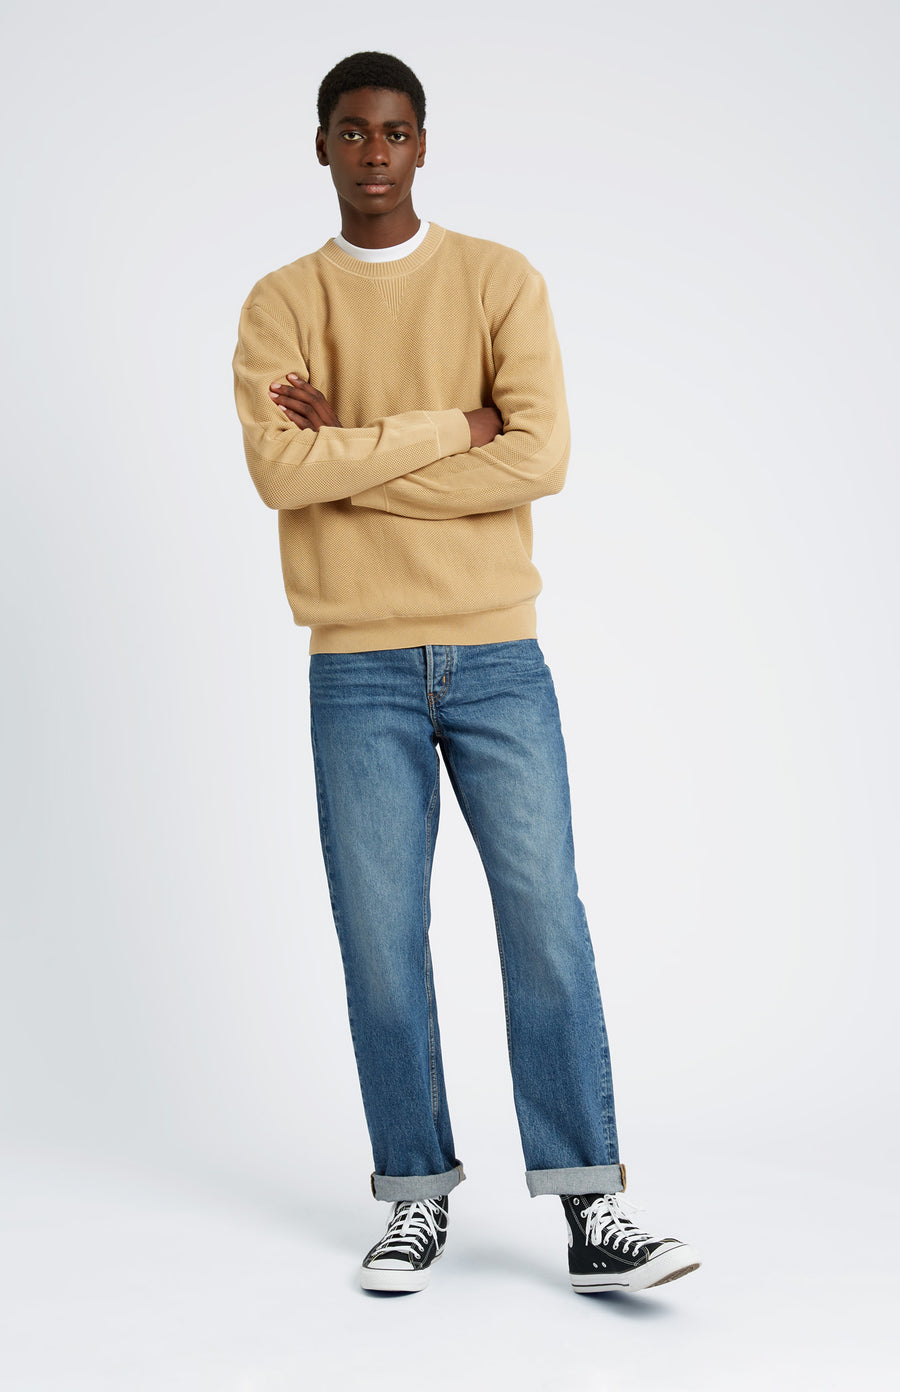 Pringle of Scotland Men's Cotton Sweatshirt Jumper in Sandstorm on model full length